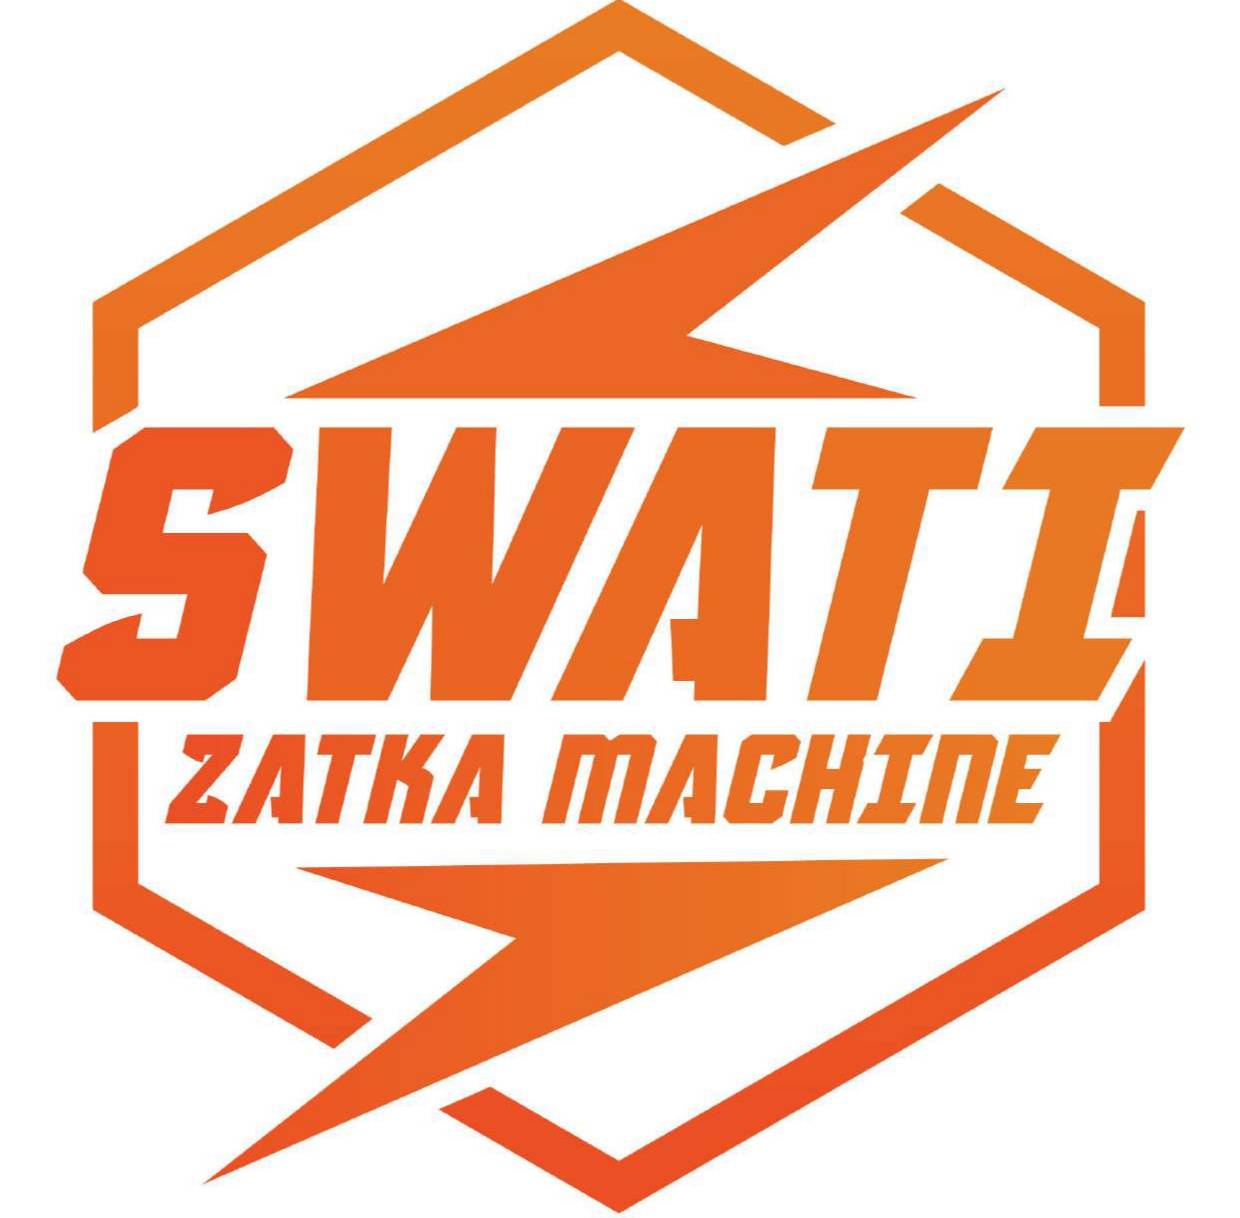 Swati Zatka Machine